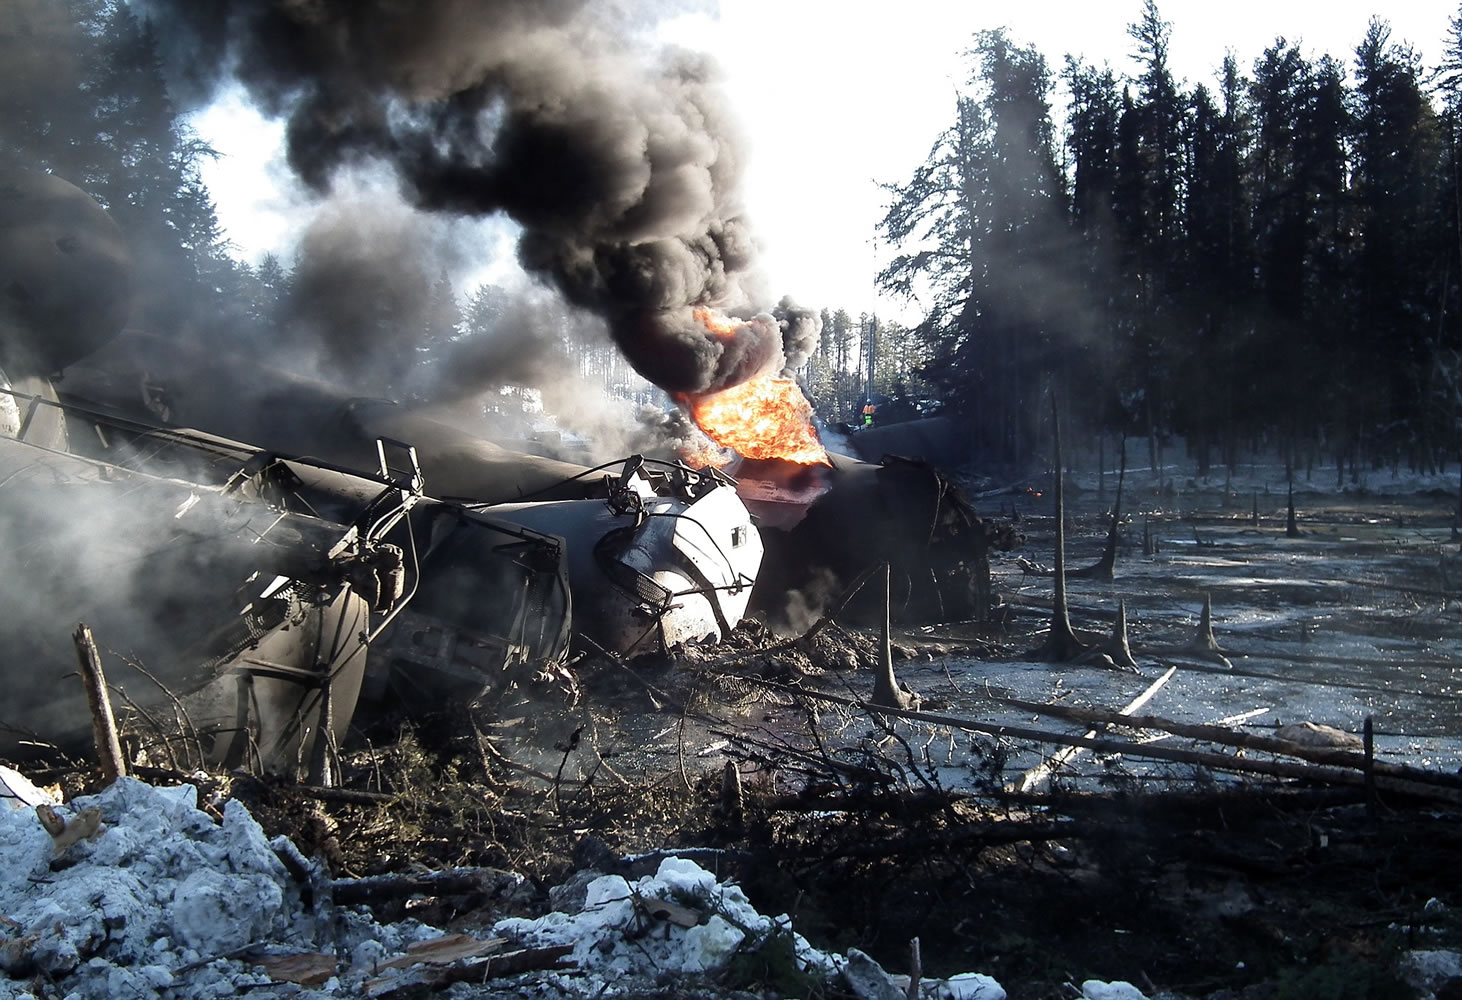 A ruptured tank car burns after a crude oil train derailment Feb.